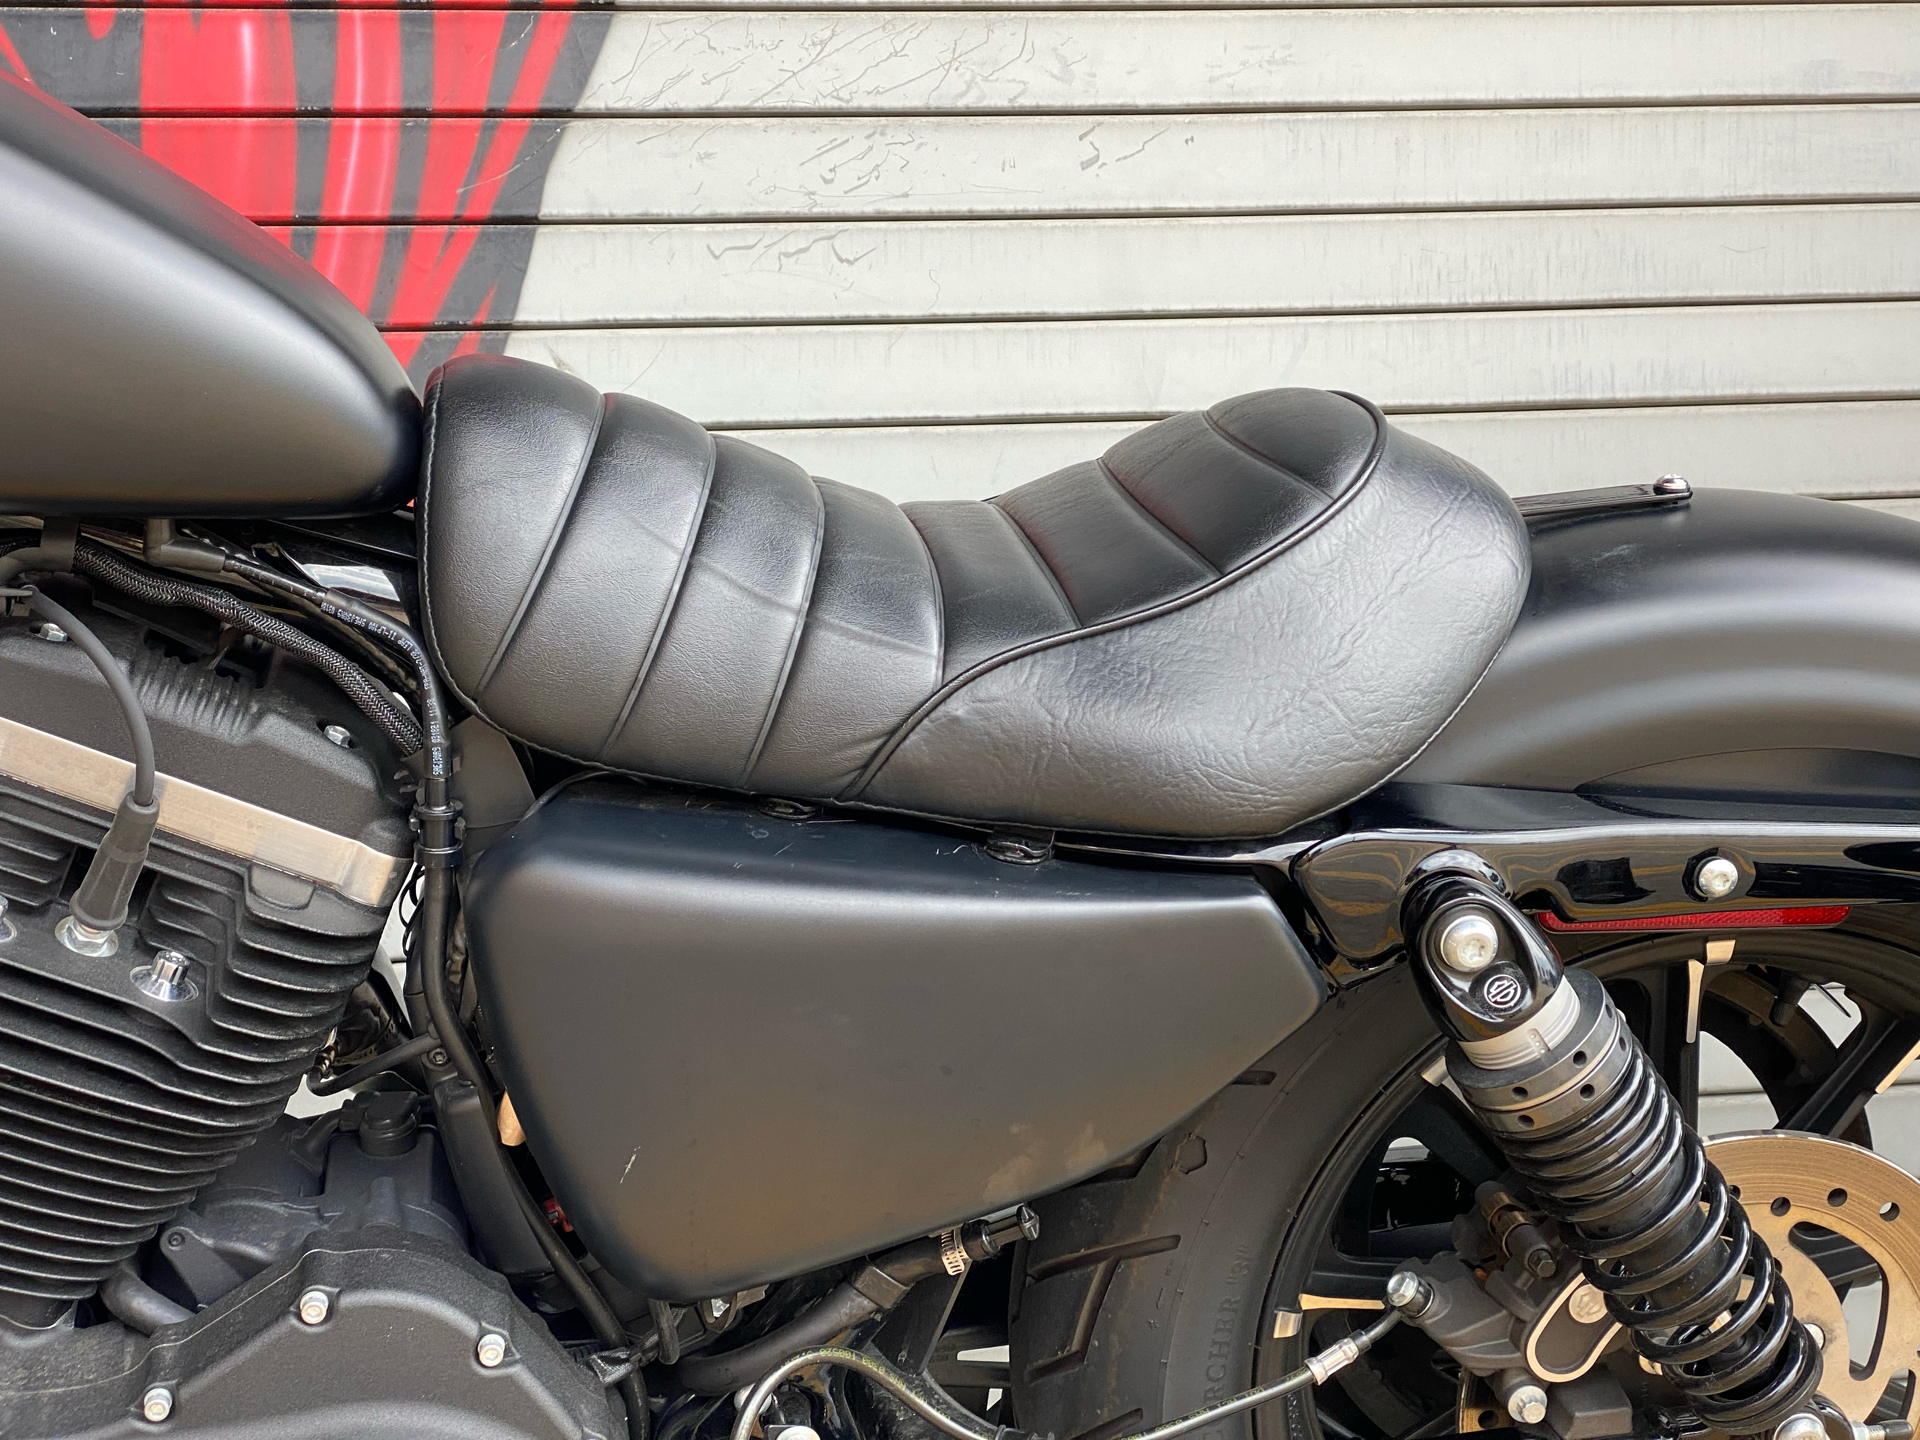 2021 Harley-Davidson Iron 883™ in Carrollton, Texas - Photo 15